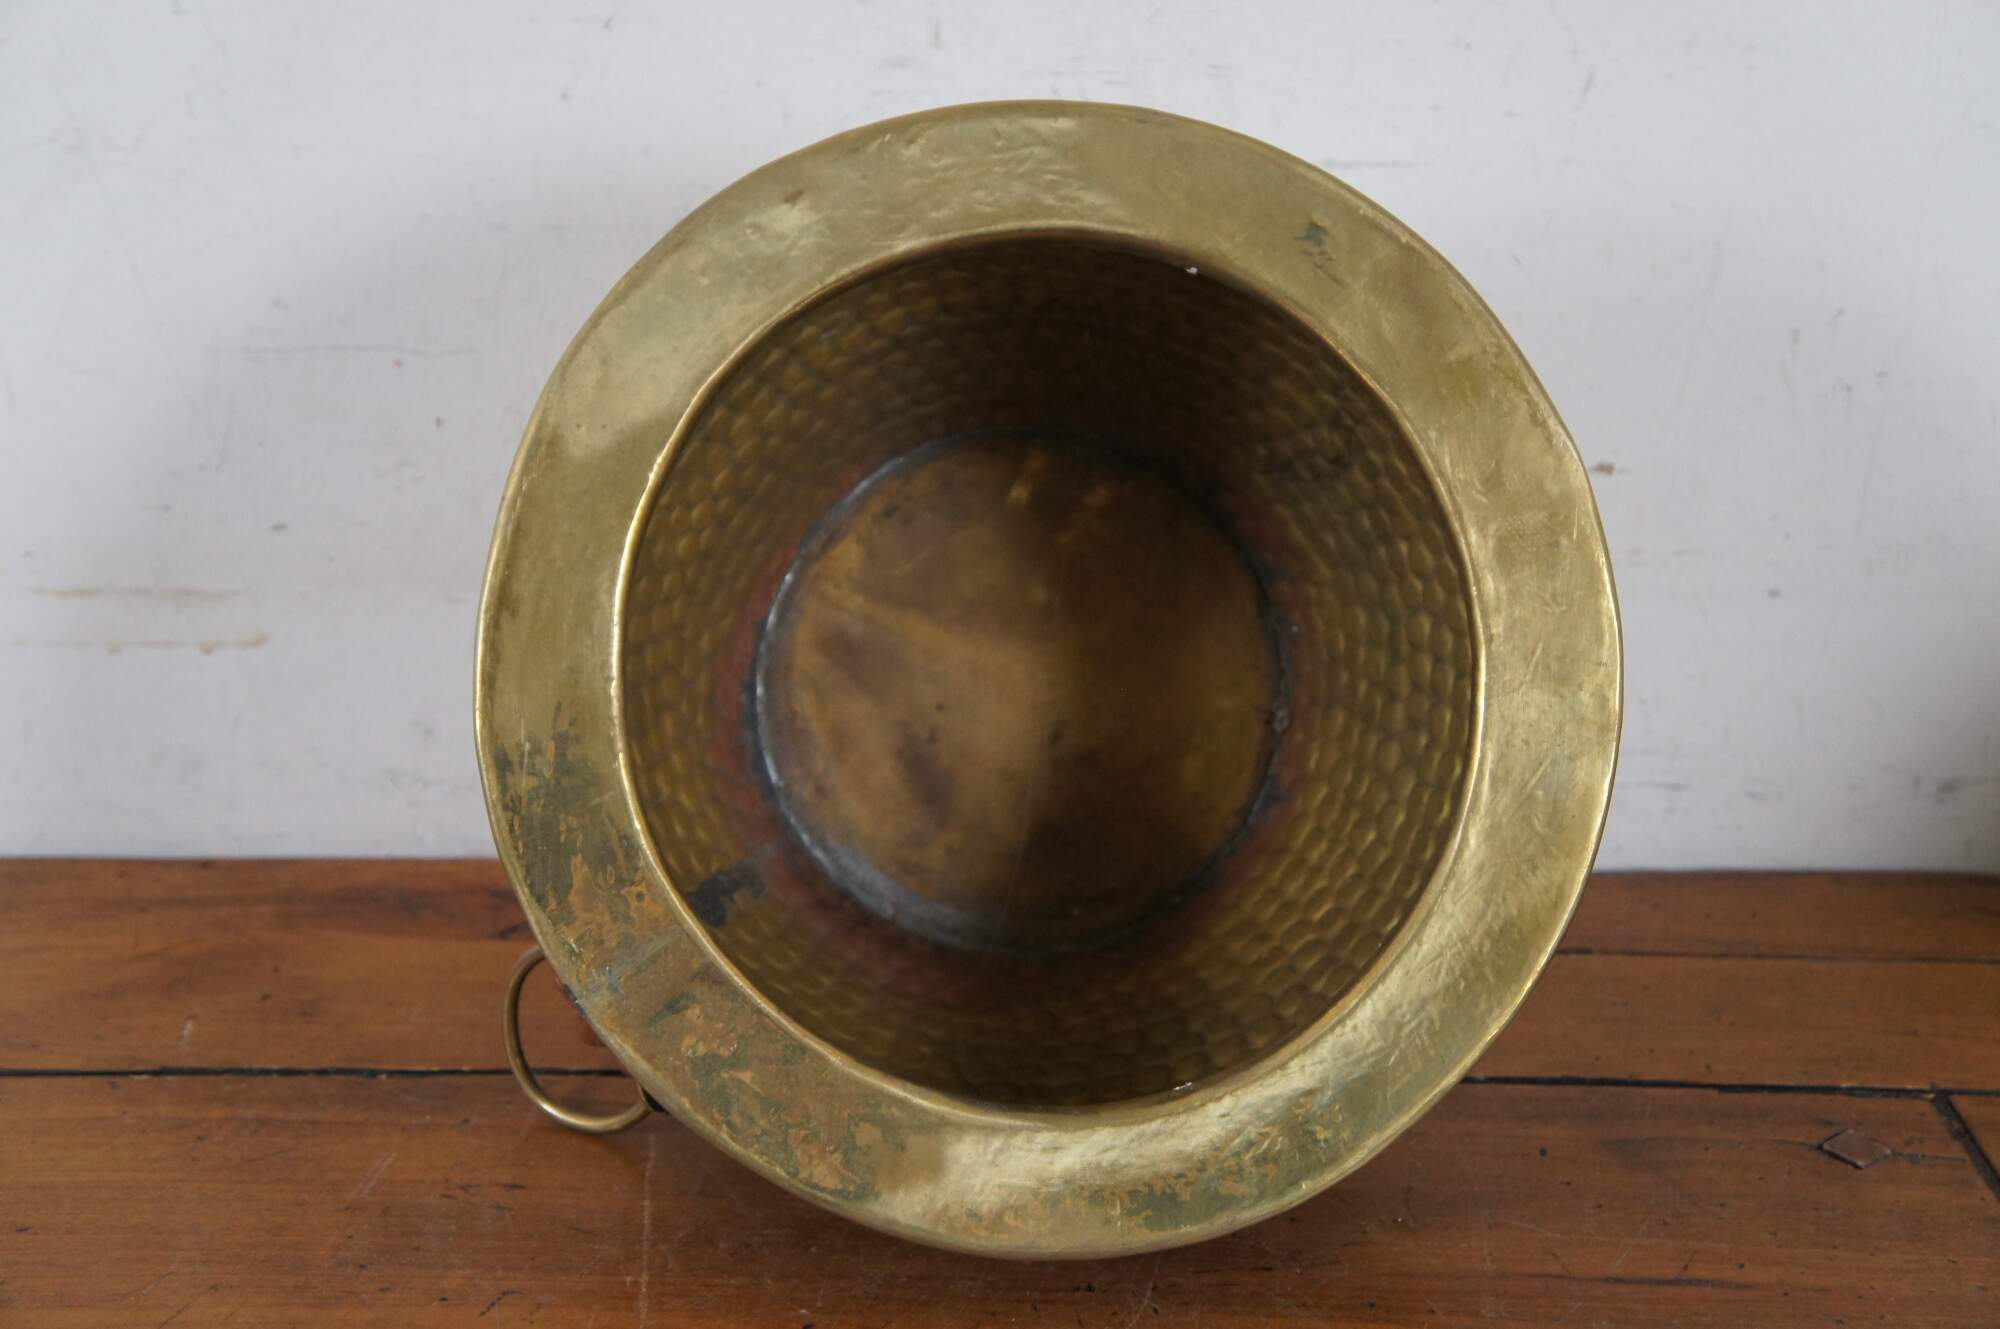 Cachepot  Vintage brass, Brass, Copper and brass